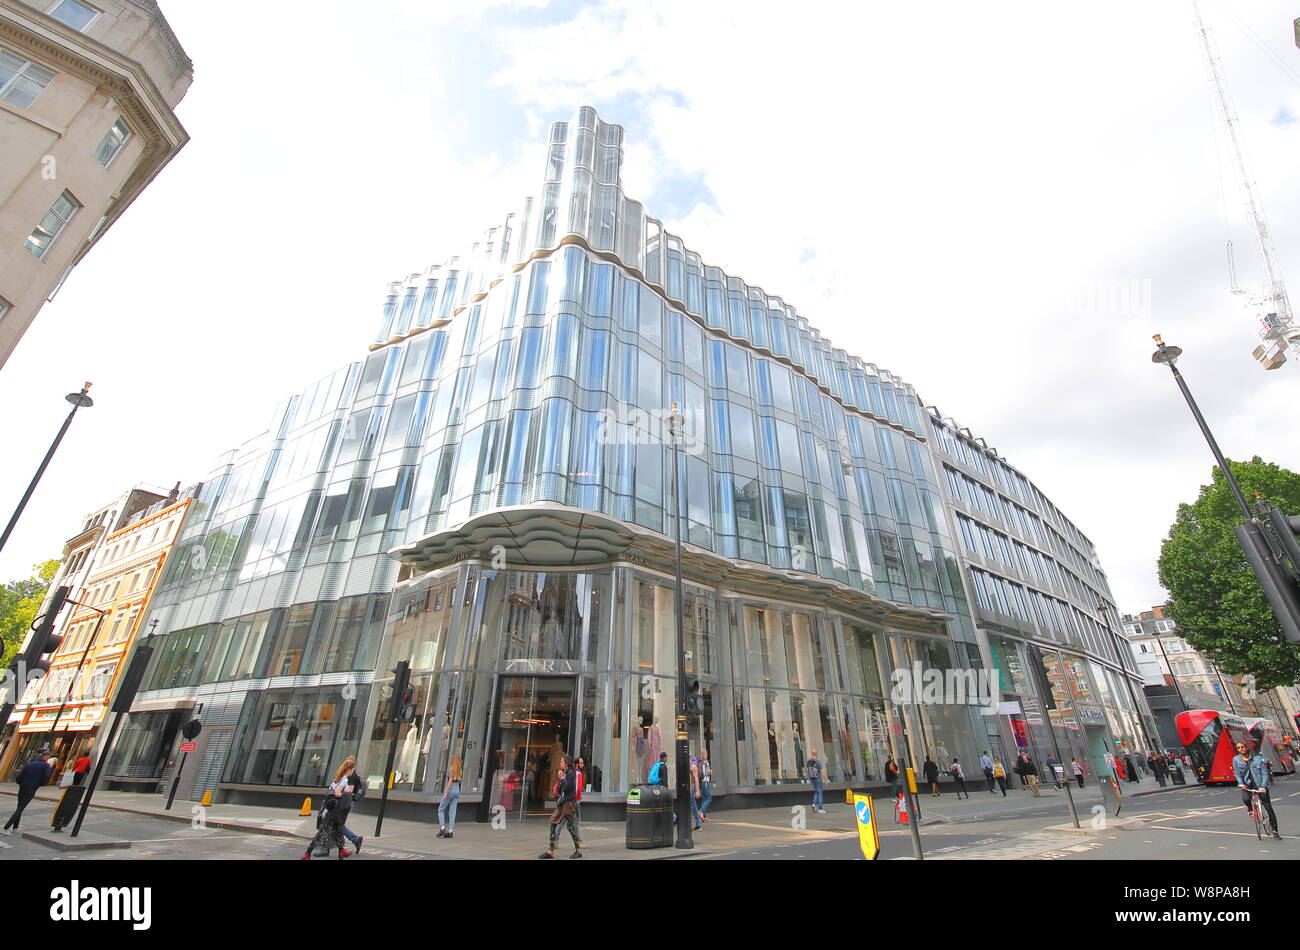 People visit Zara store Tottenham Court road London UK Stock Photo - Alamy